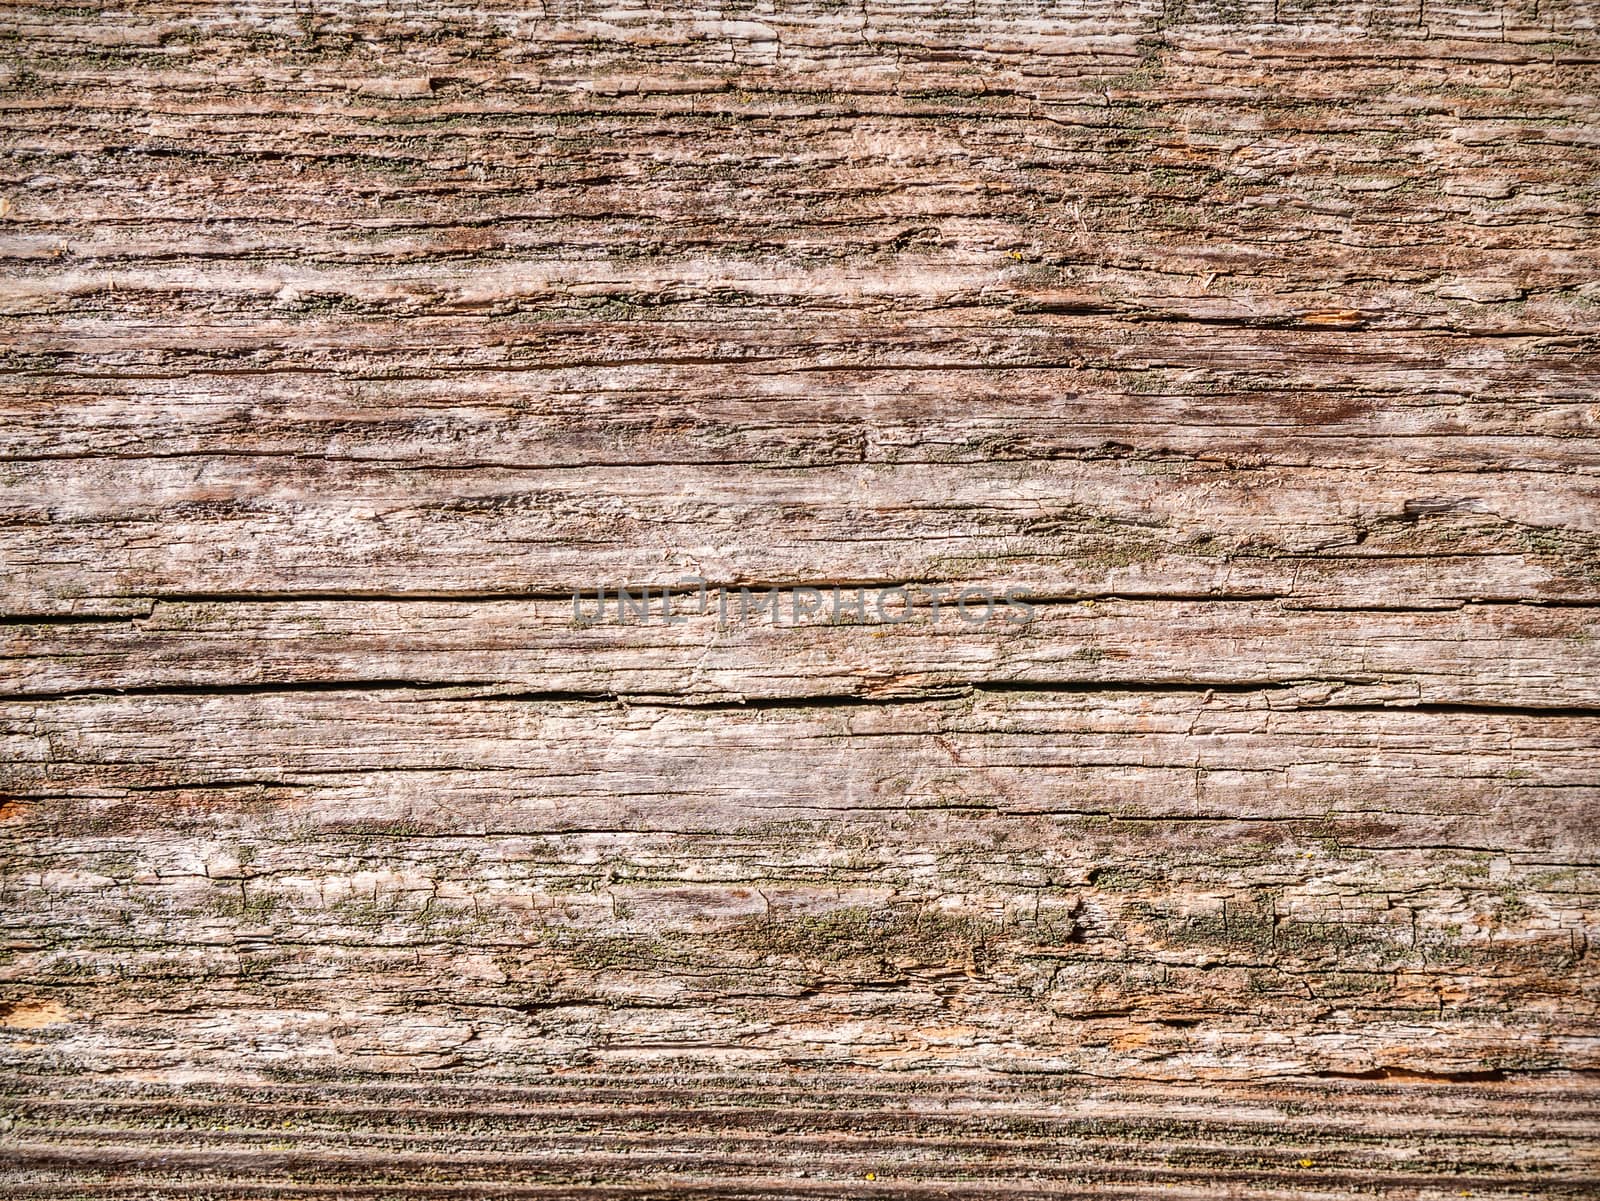 Old wooden texture by zeffss